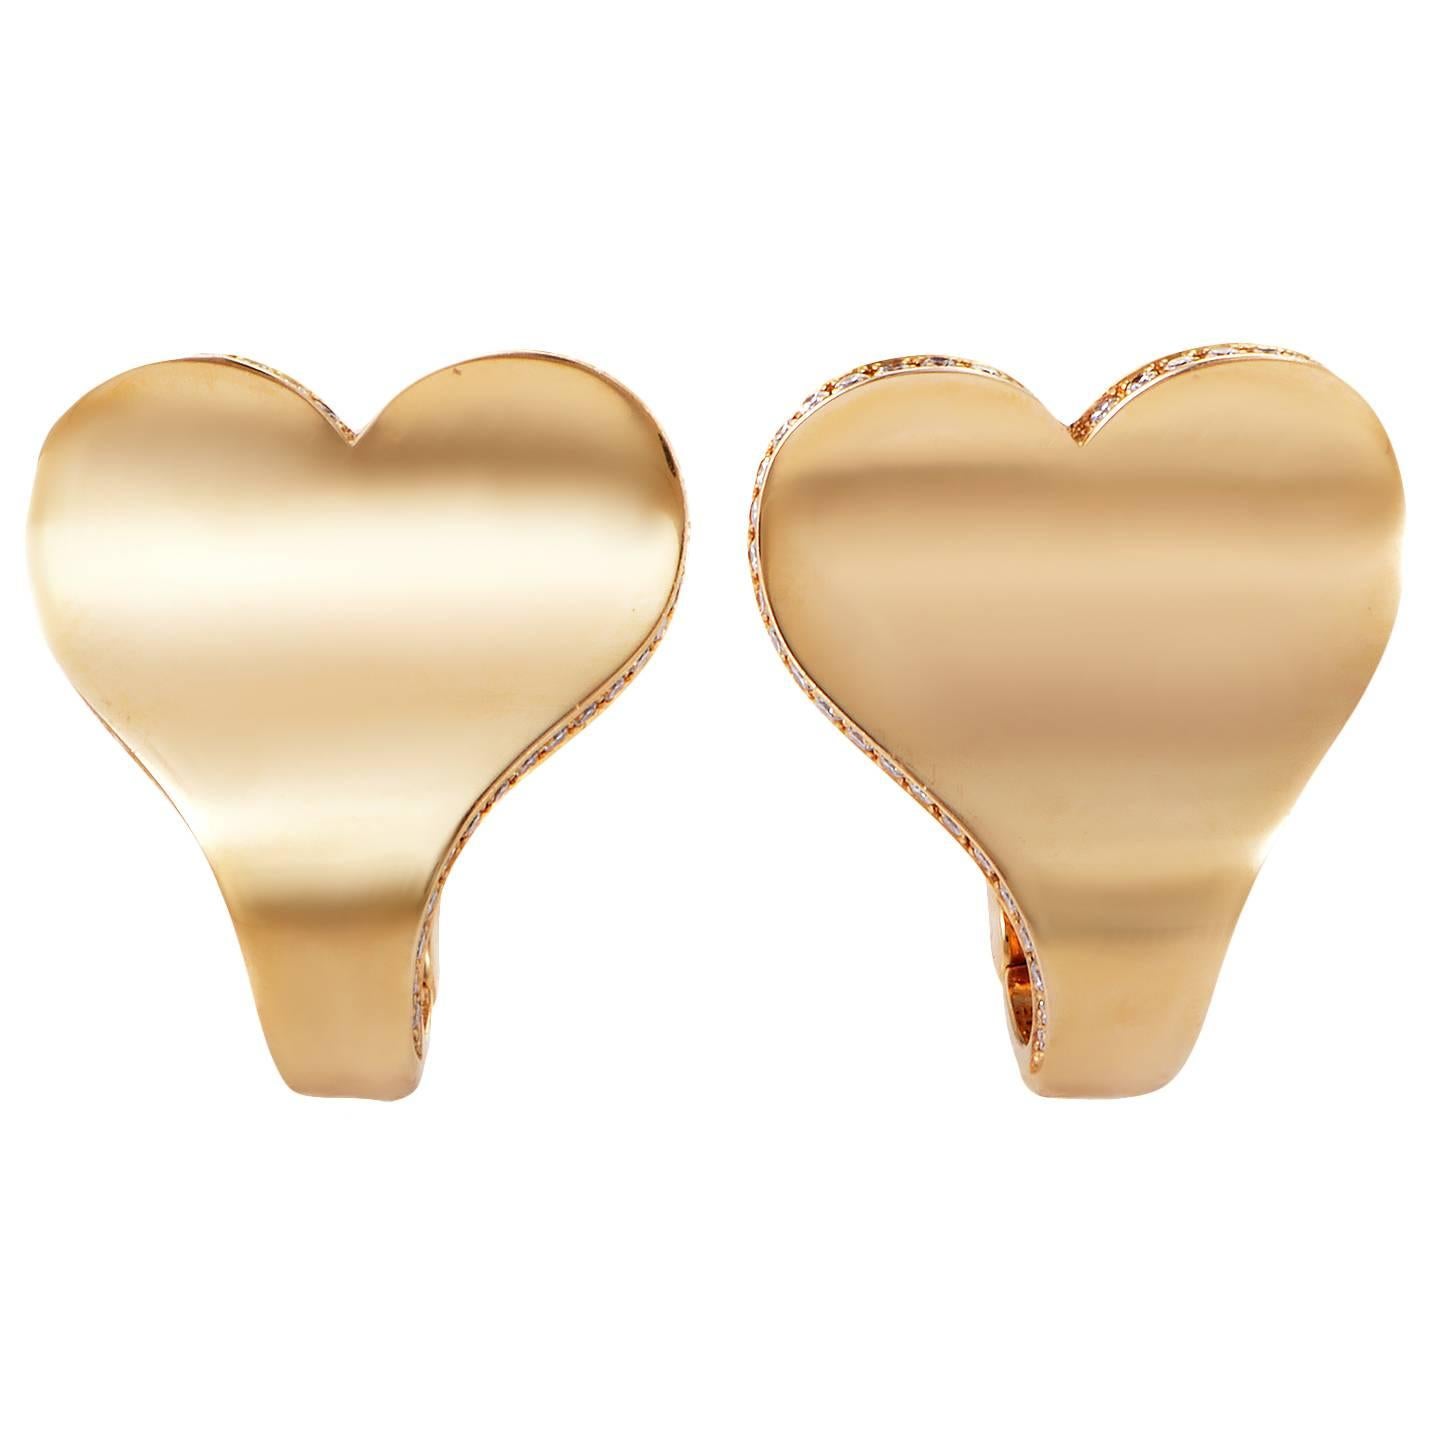 Roger Dubuis Diamond Gold Trim Curved Heart Earrings